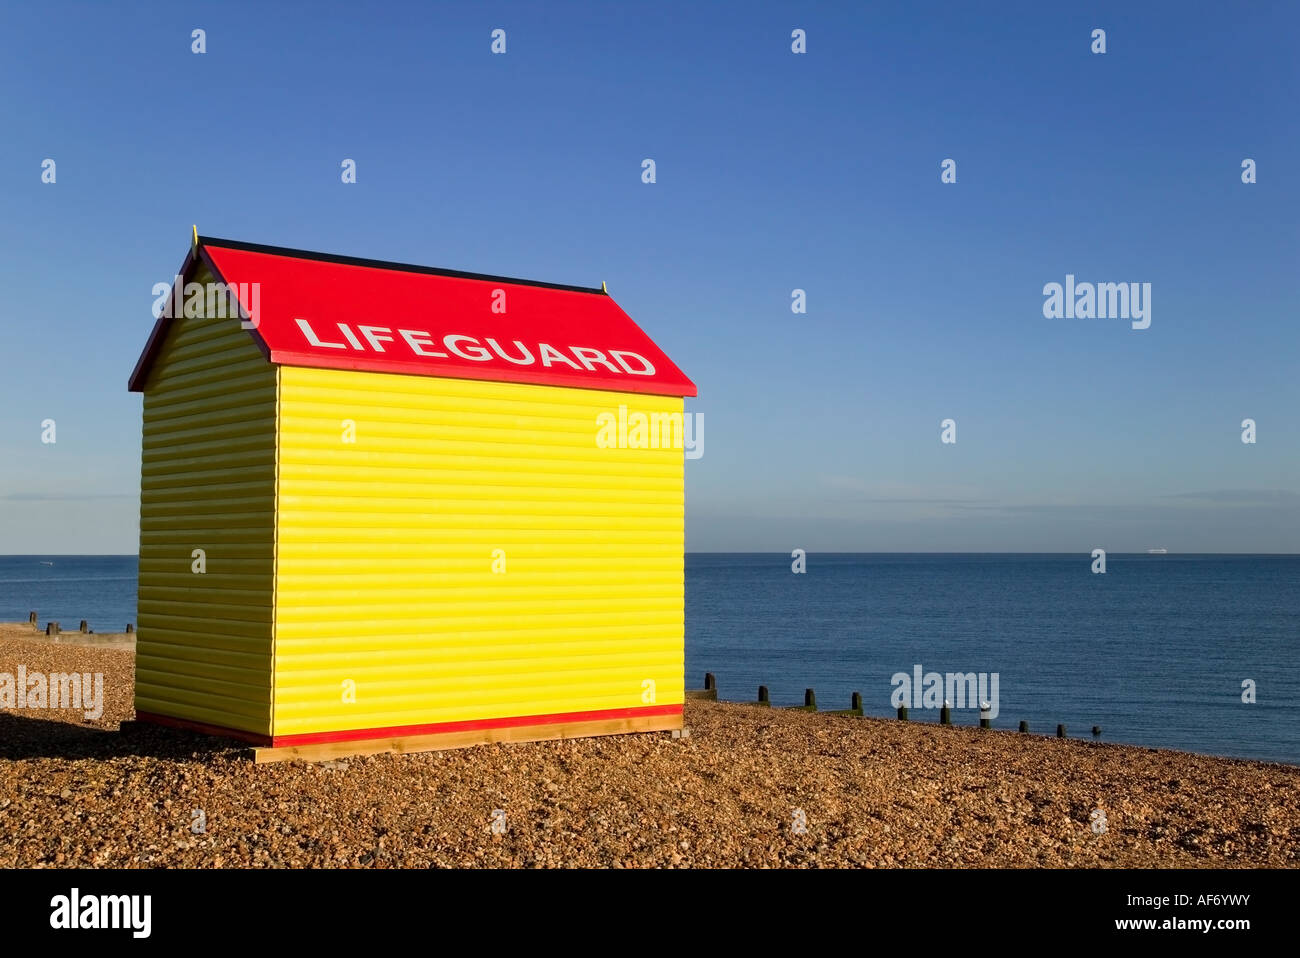 Lifeguard station on a beach at sunrise Stock Photo